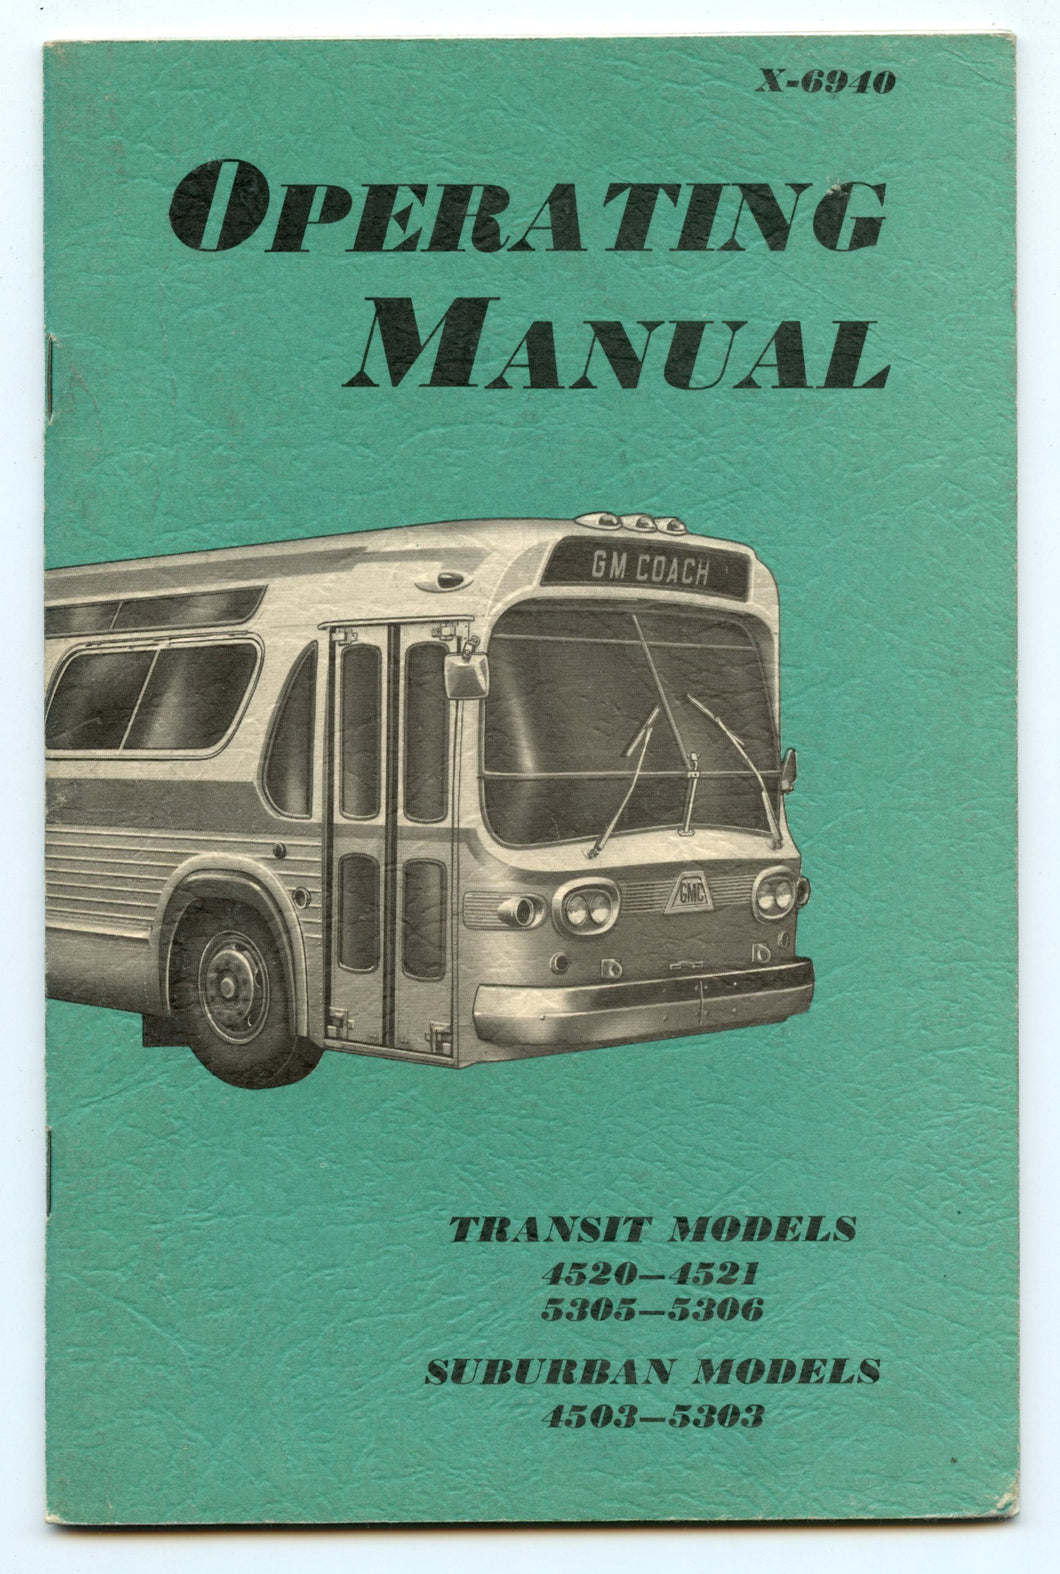 Operating Manual, Transit Models 4520-4521, 5305-5306, Suburban Models 4503-5303